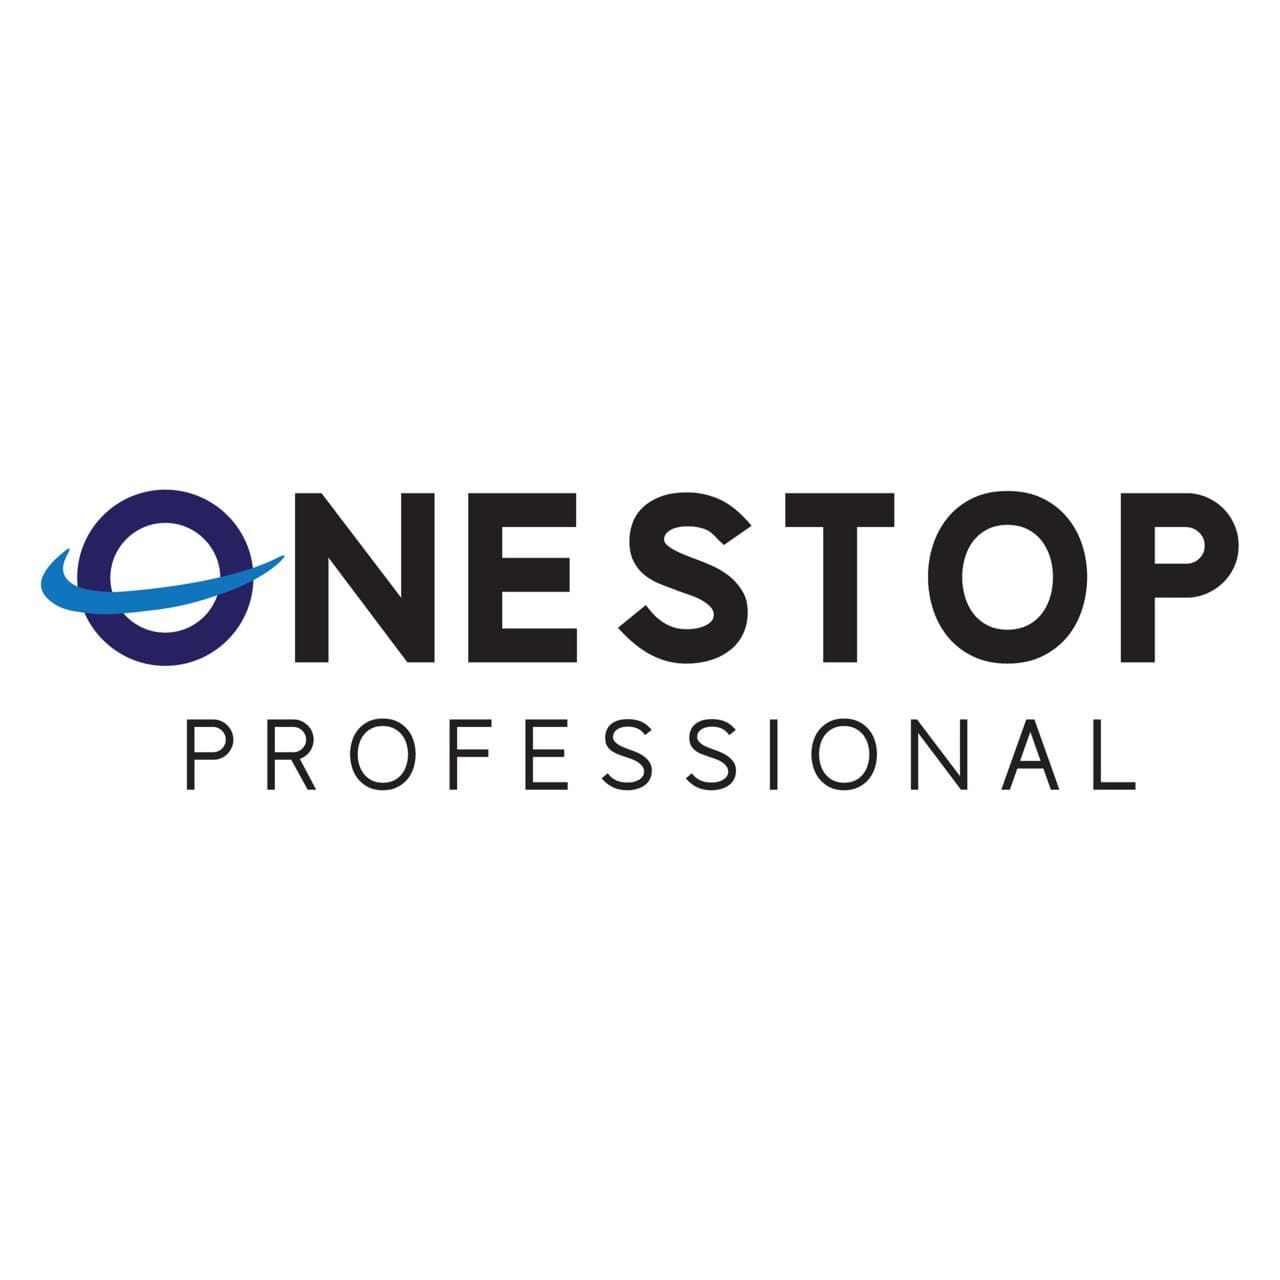 Onestop Professional Services Pte. Ltd. logo